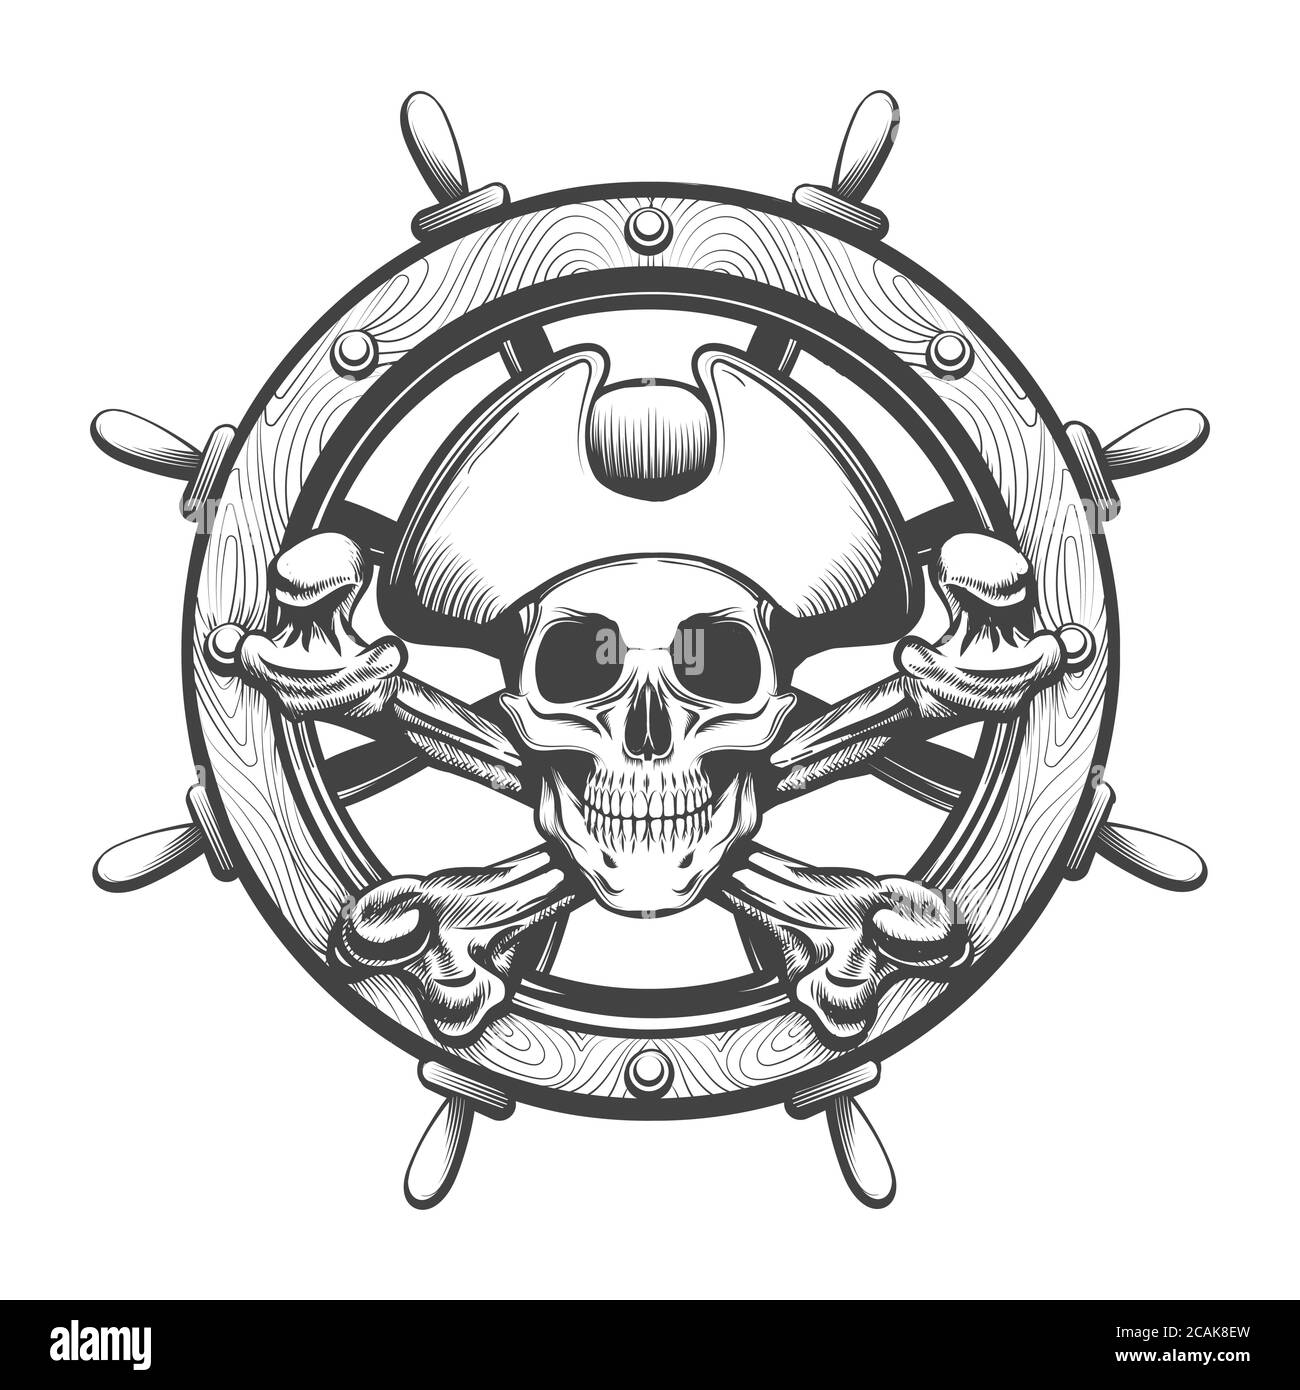 20 Ship Wheel Tattoo Silhouette Illustrations RoyaltyFree Vector  Graphics  Clip Art  iStock